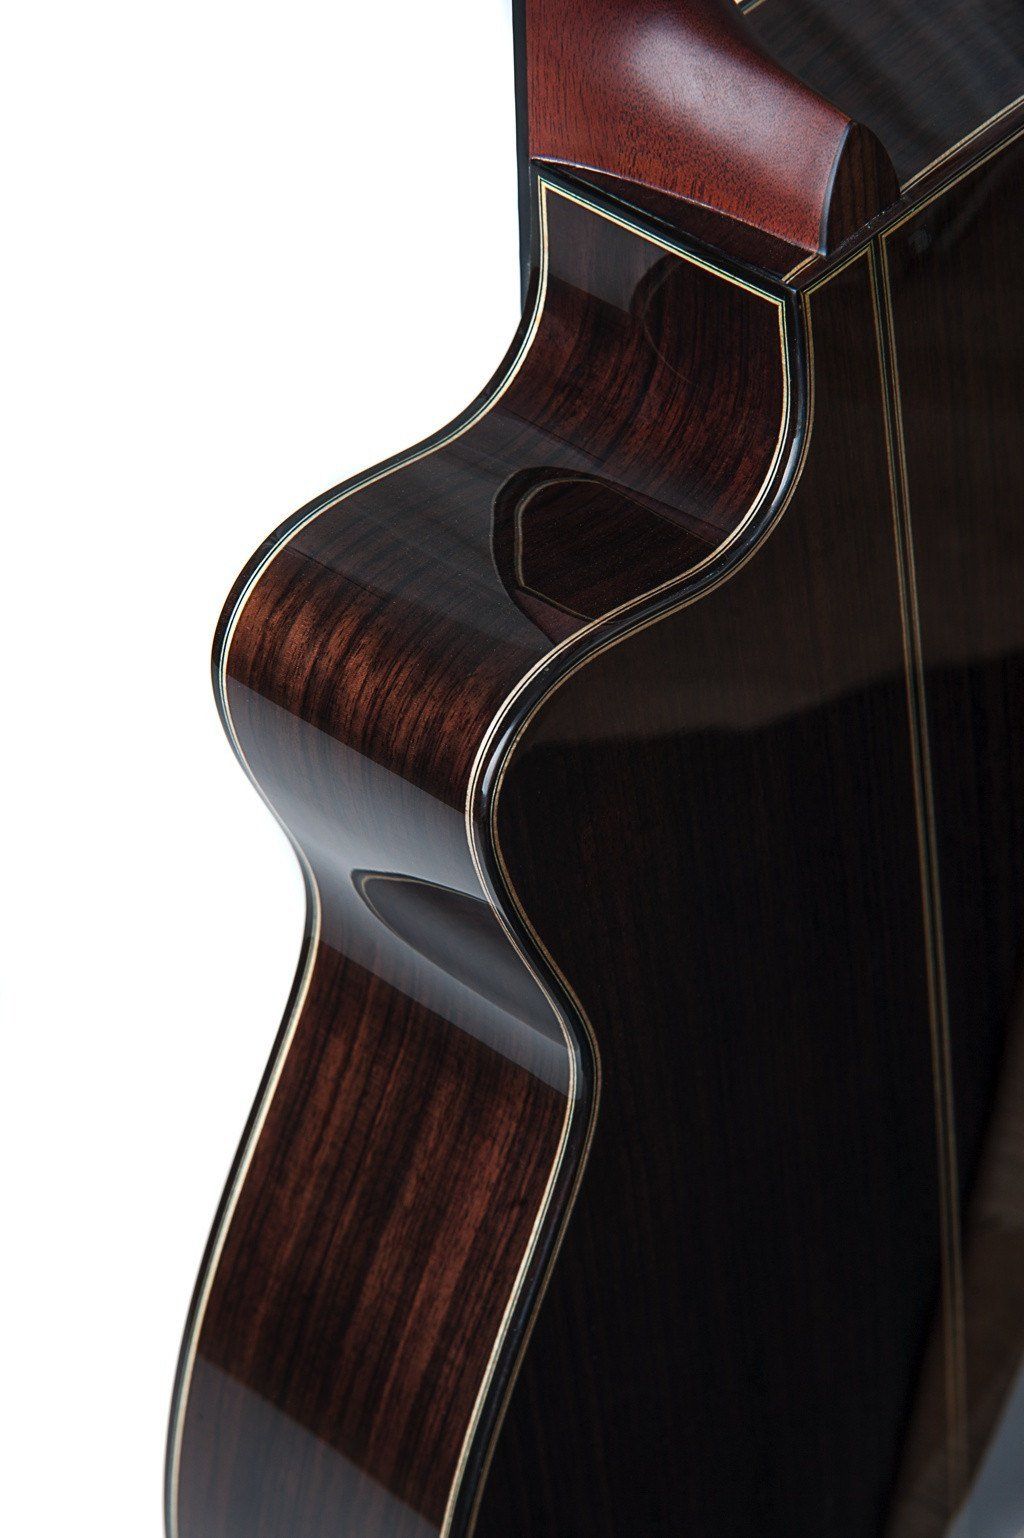 Auden Rosewood Bowman Spruce Top Cutaway Electro Acoustic Guitar, Electro Acoustic Guitar for sale at Richards Guitars.